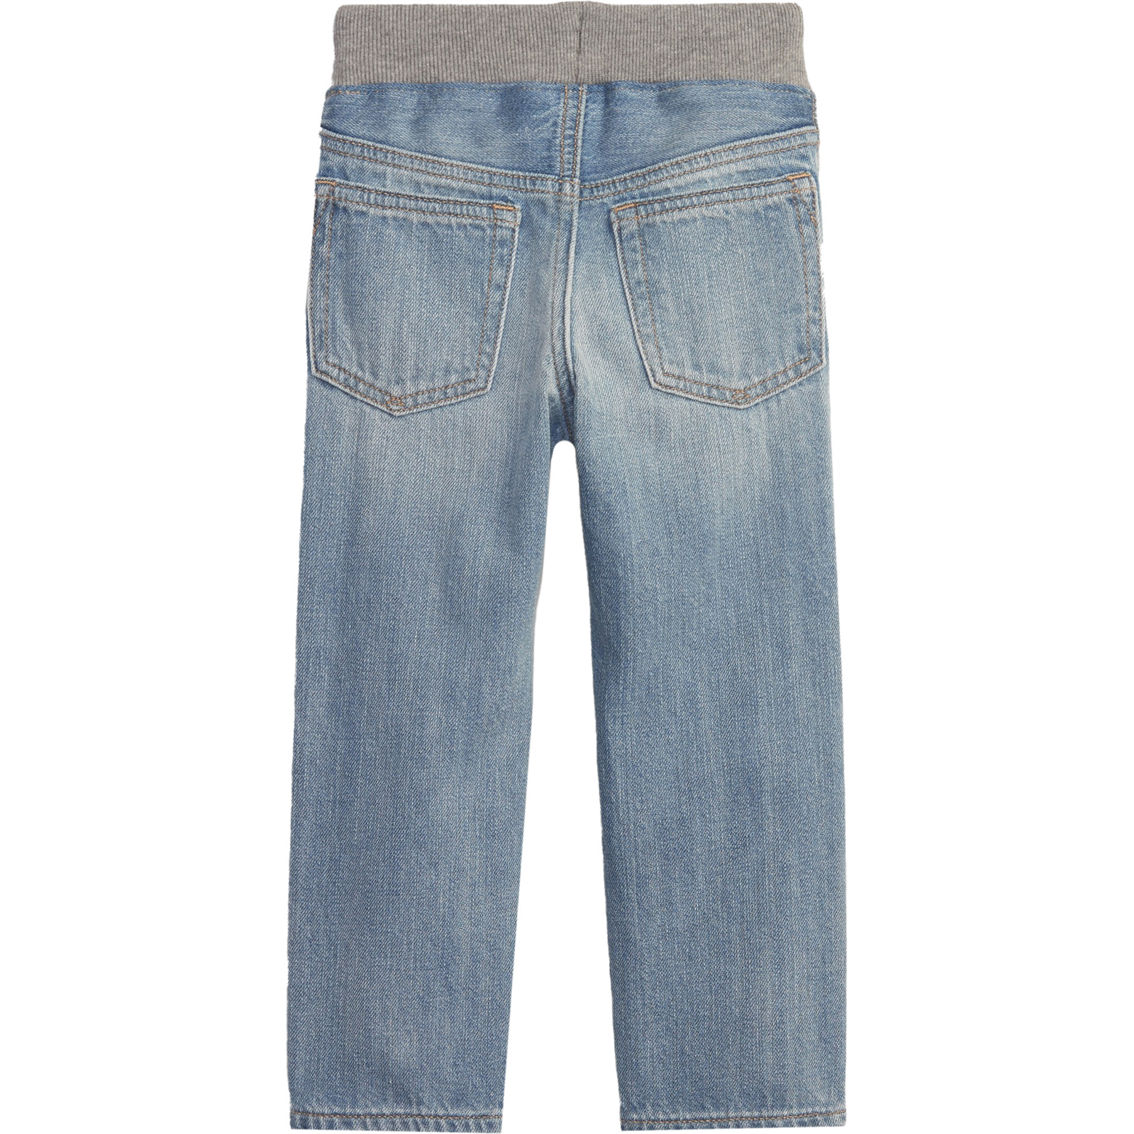 Gap Toddler Boys Slim Jeans - Image 2 of 3